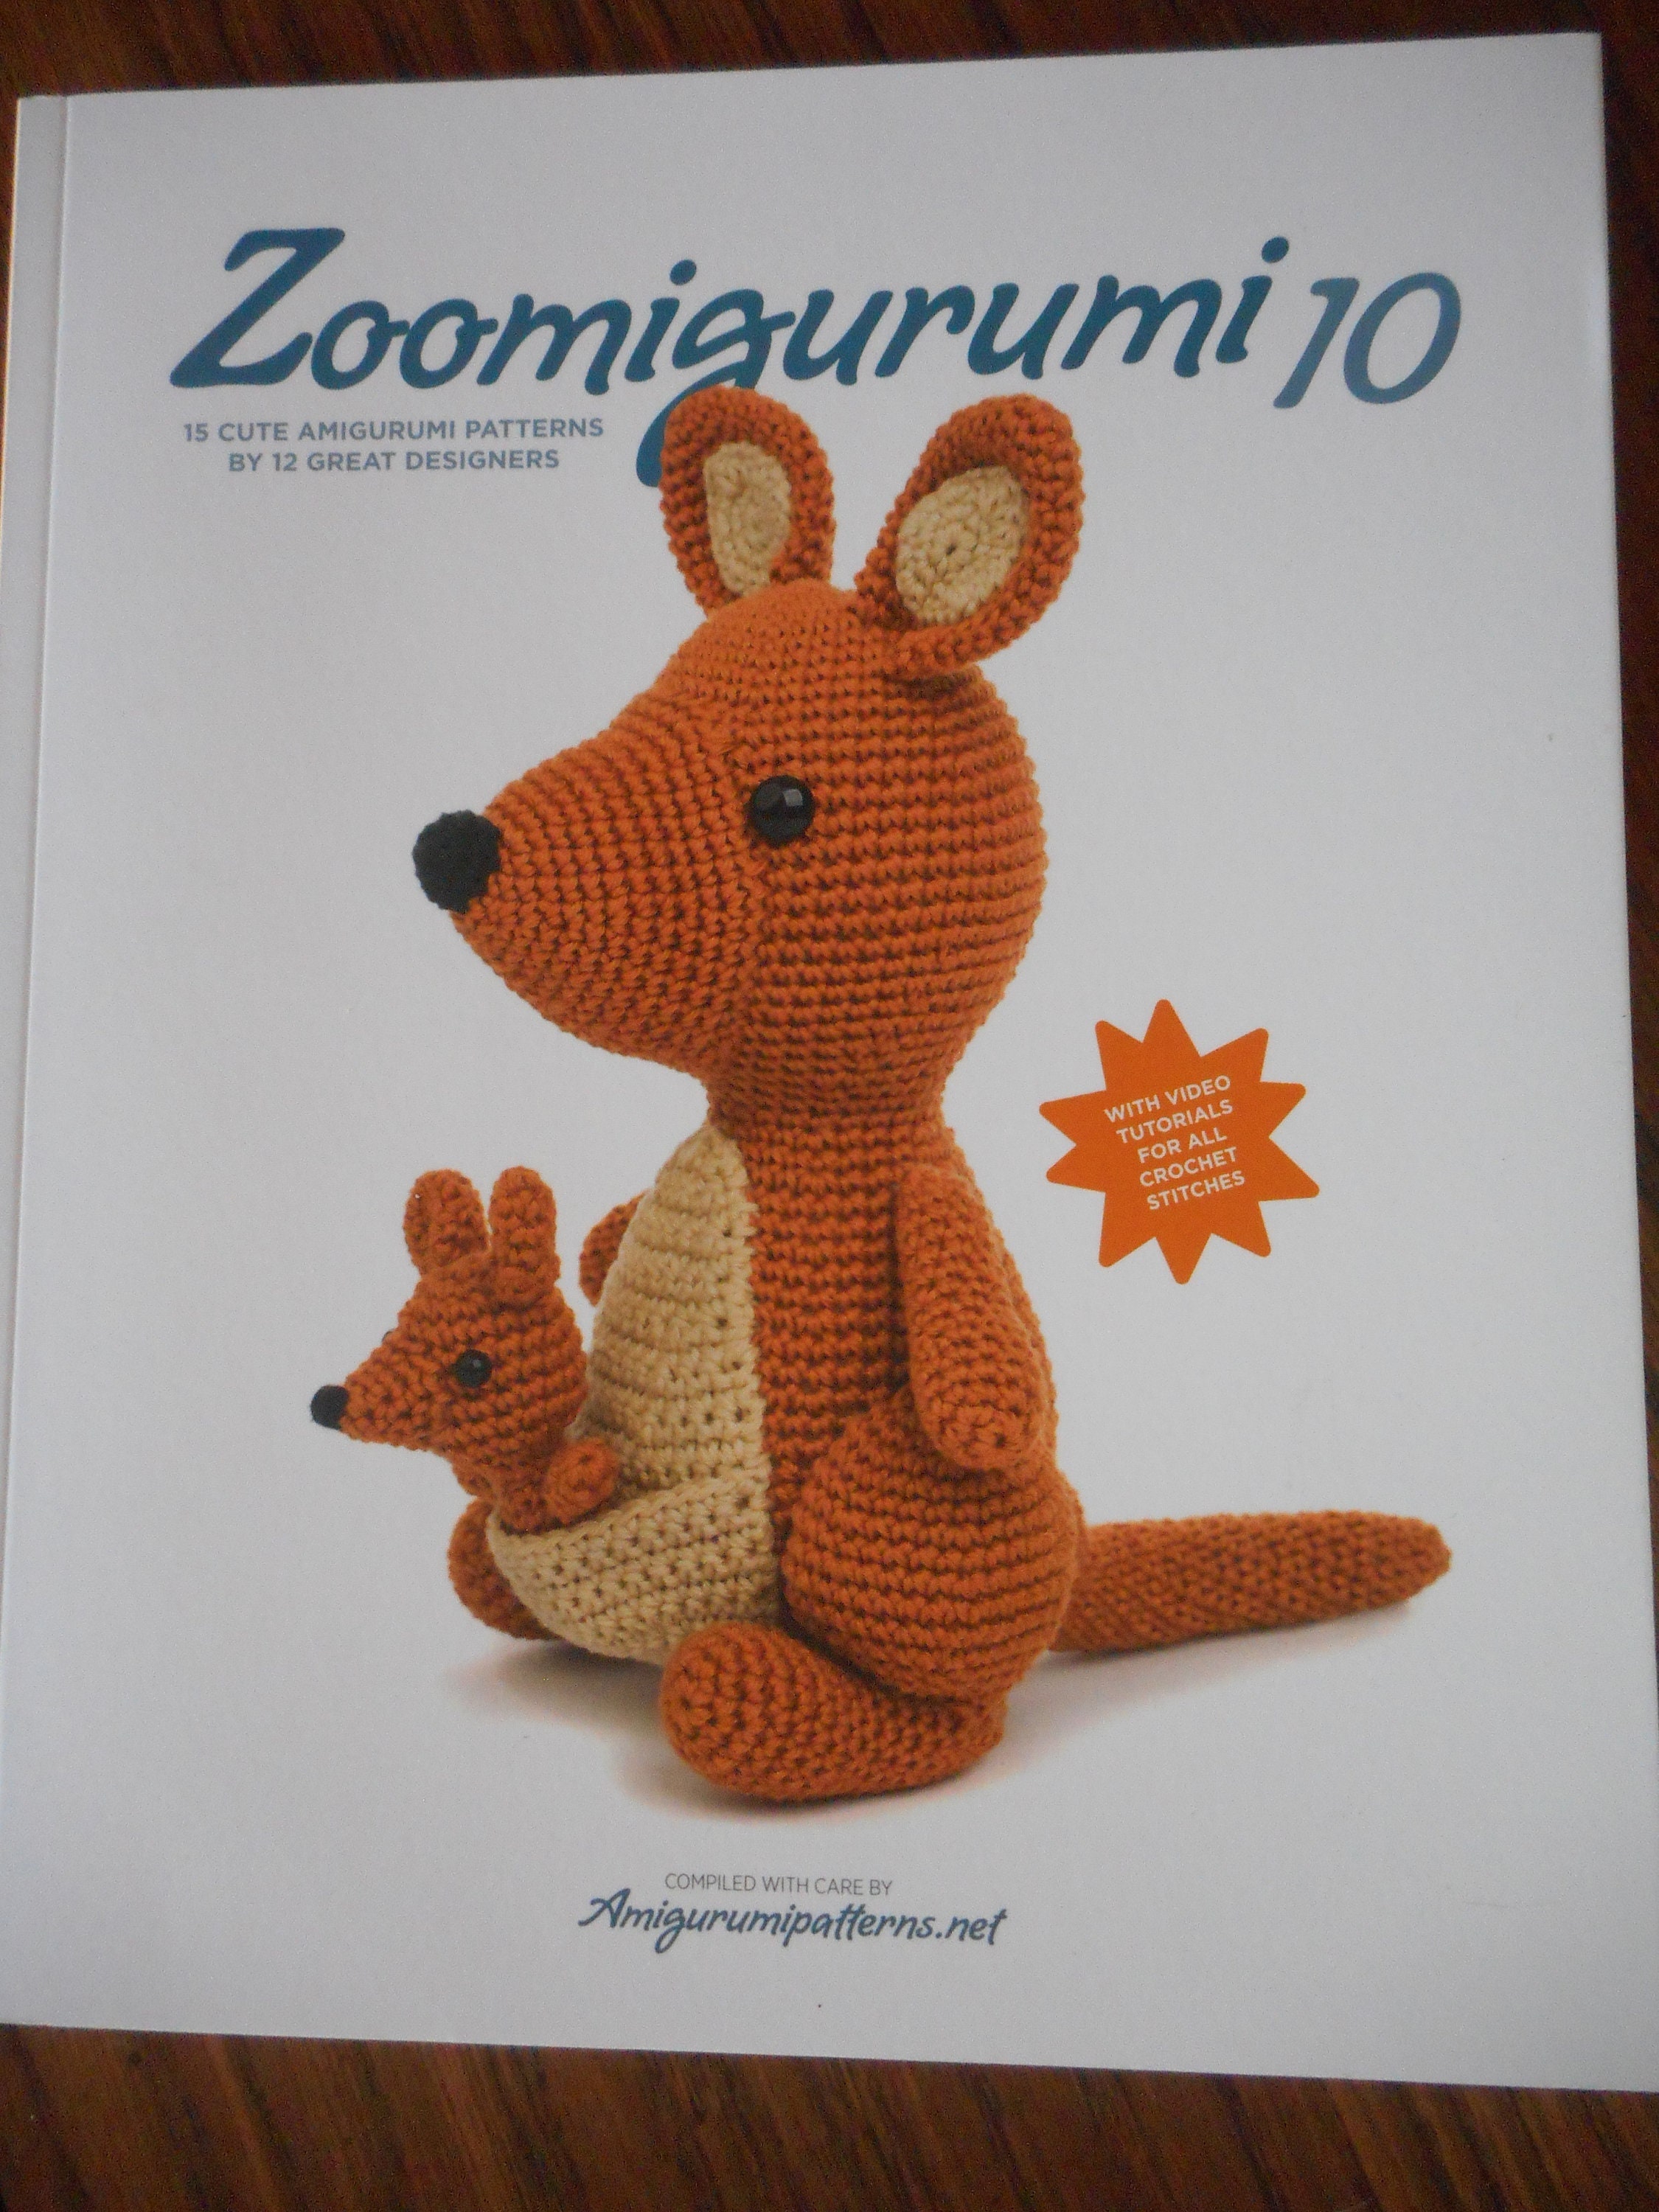 Zoomigurumi 10, Crochet Animal Amigurumi Pattern Book, Like New. 15 Great  Patterns From 12 Great Designers. 